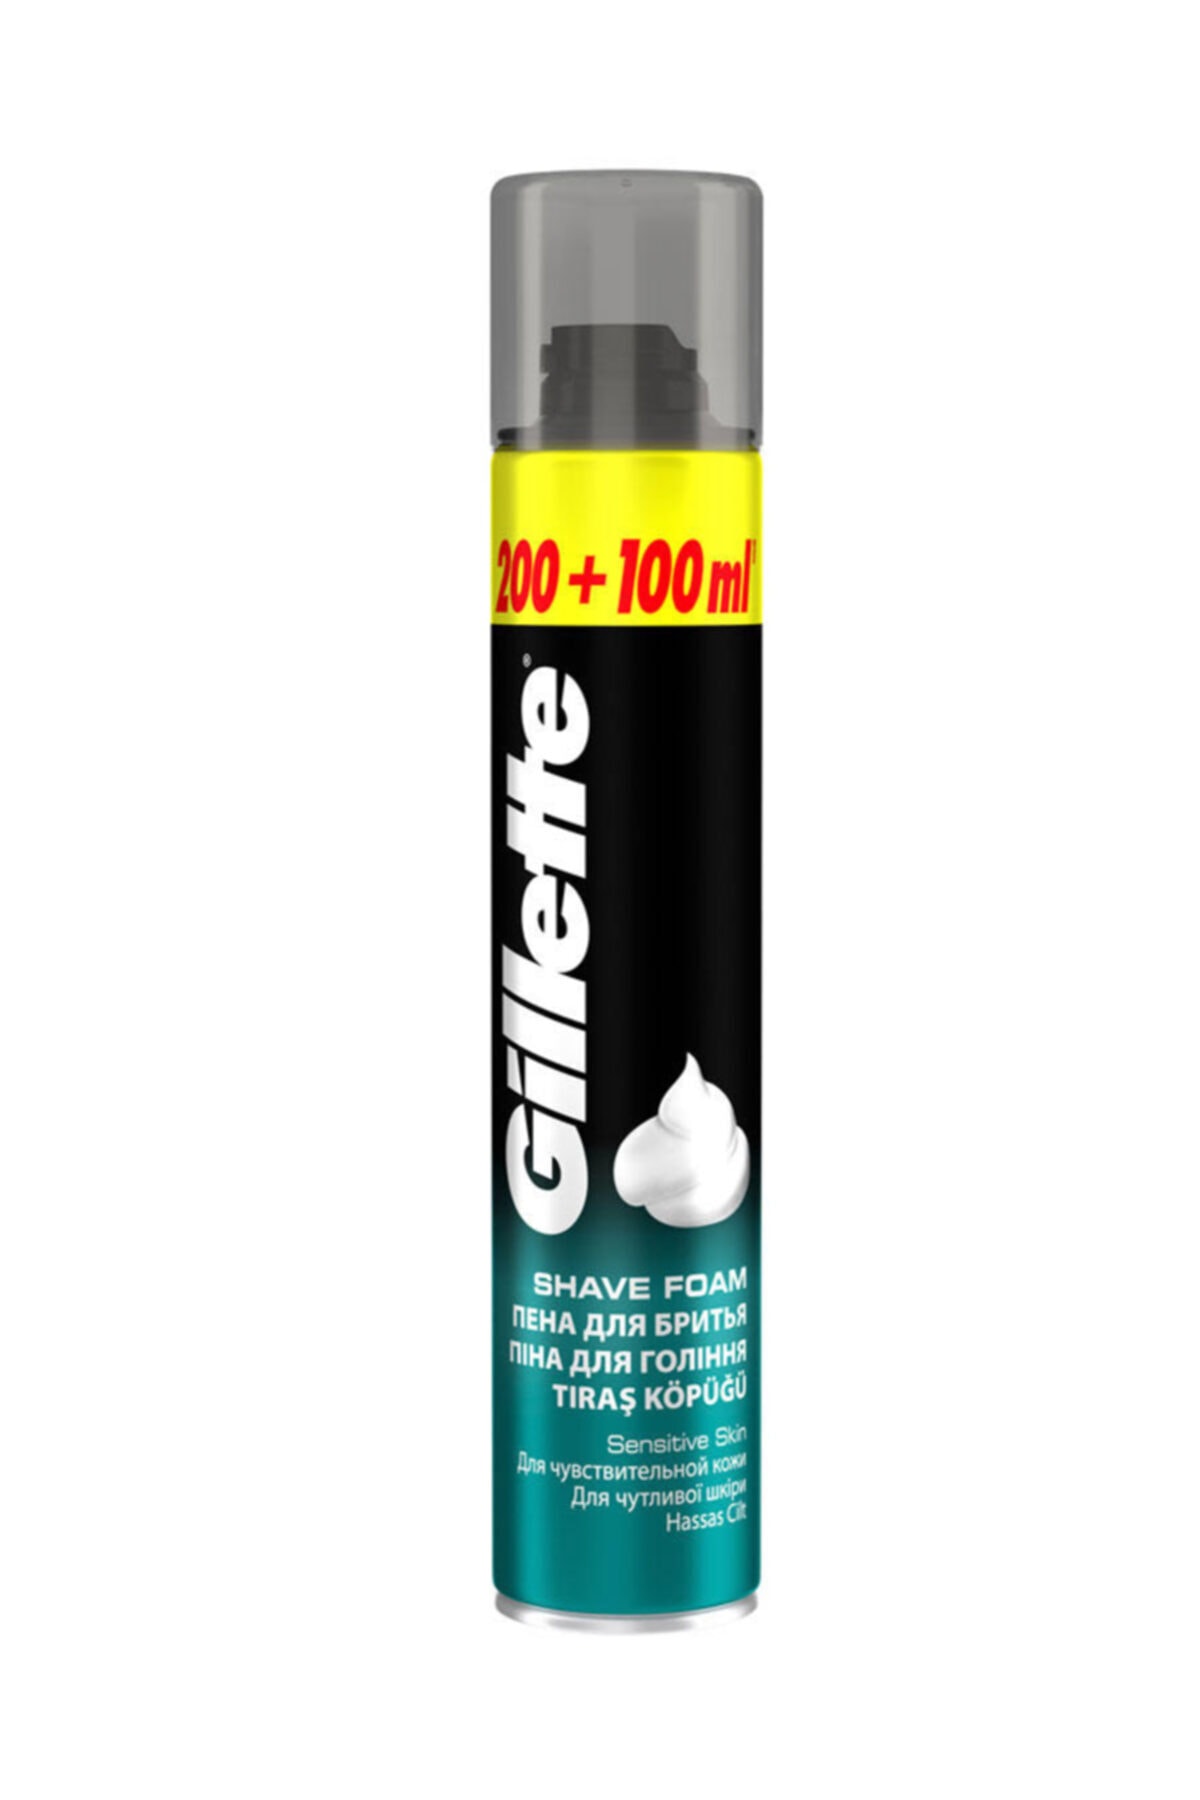 Gillette Gillette Shave Foam Traş Köpüğü 200+100